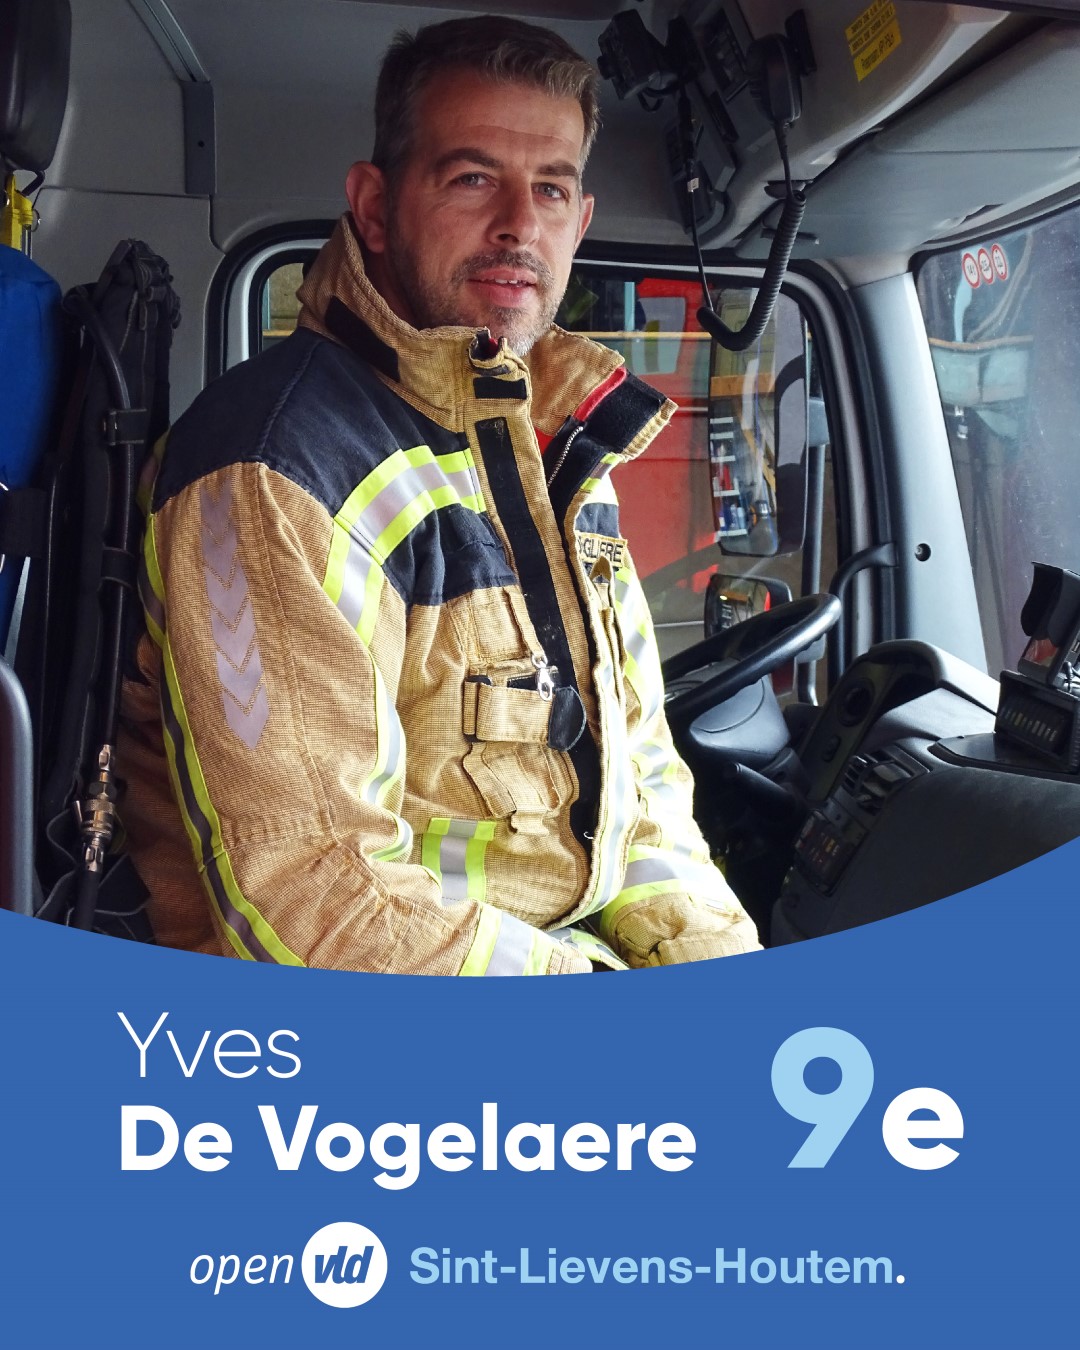 Yves De Vogelaere